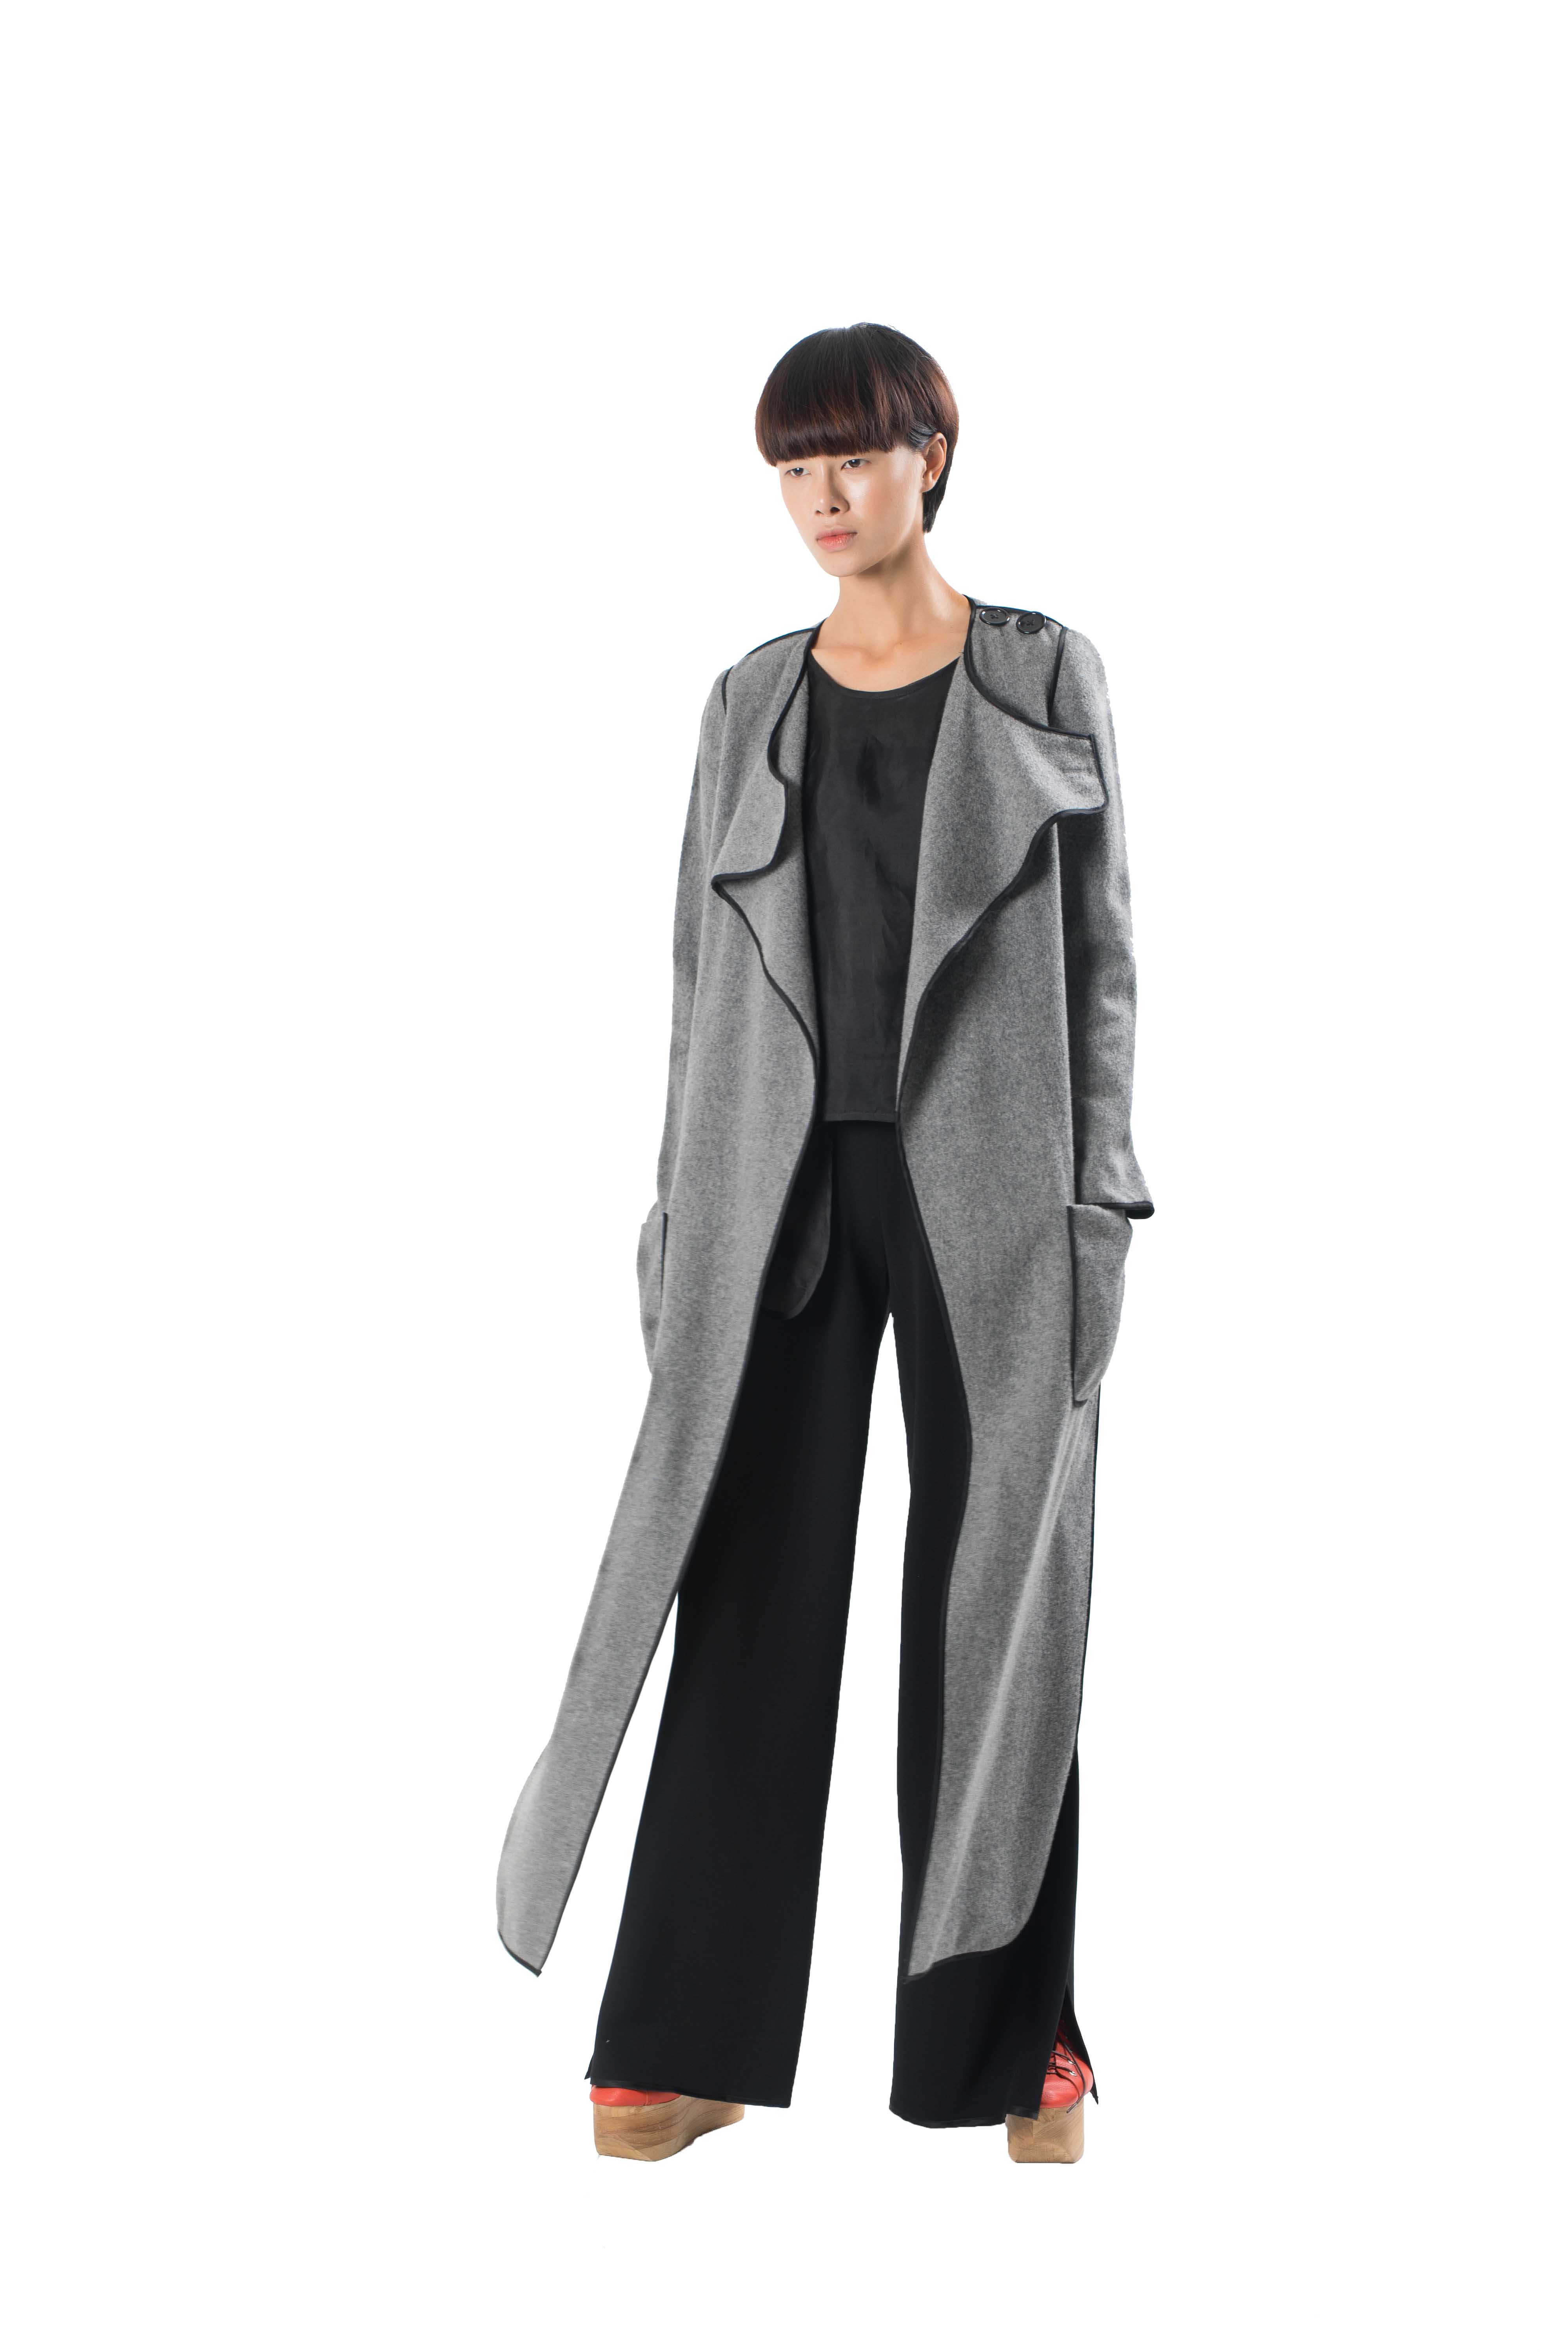 Long grey coat at front with short waist line at back